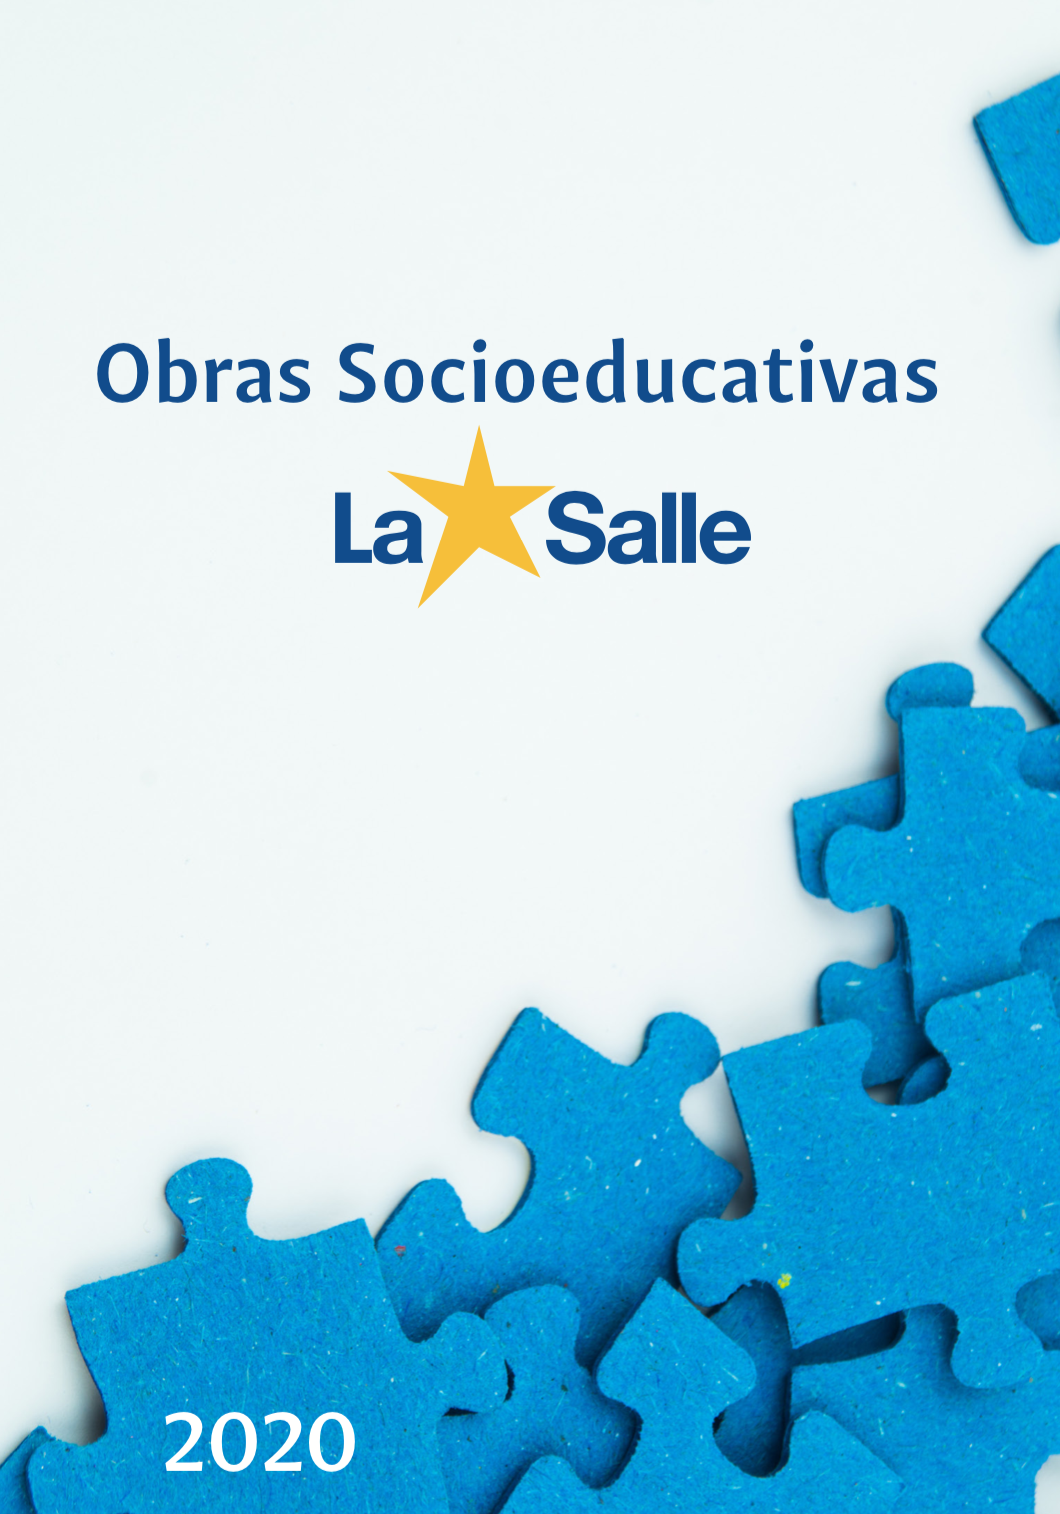 Obras Socioeducativas La Salle